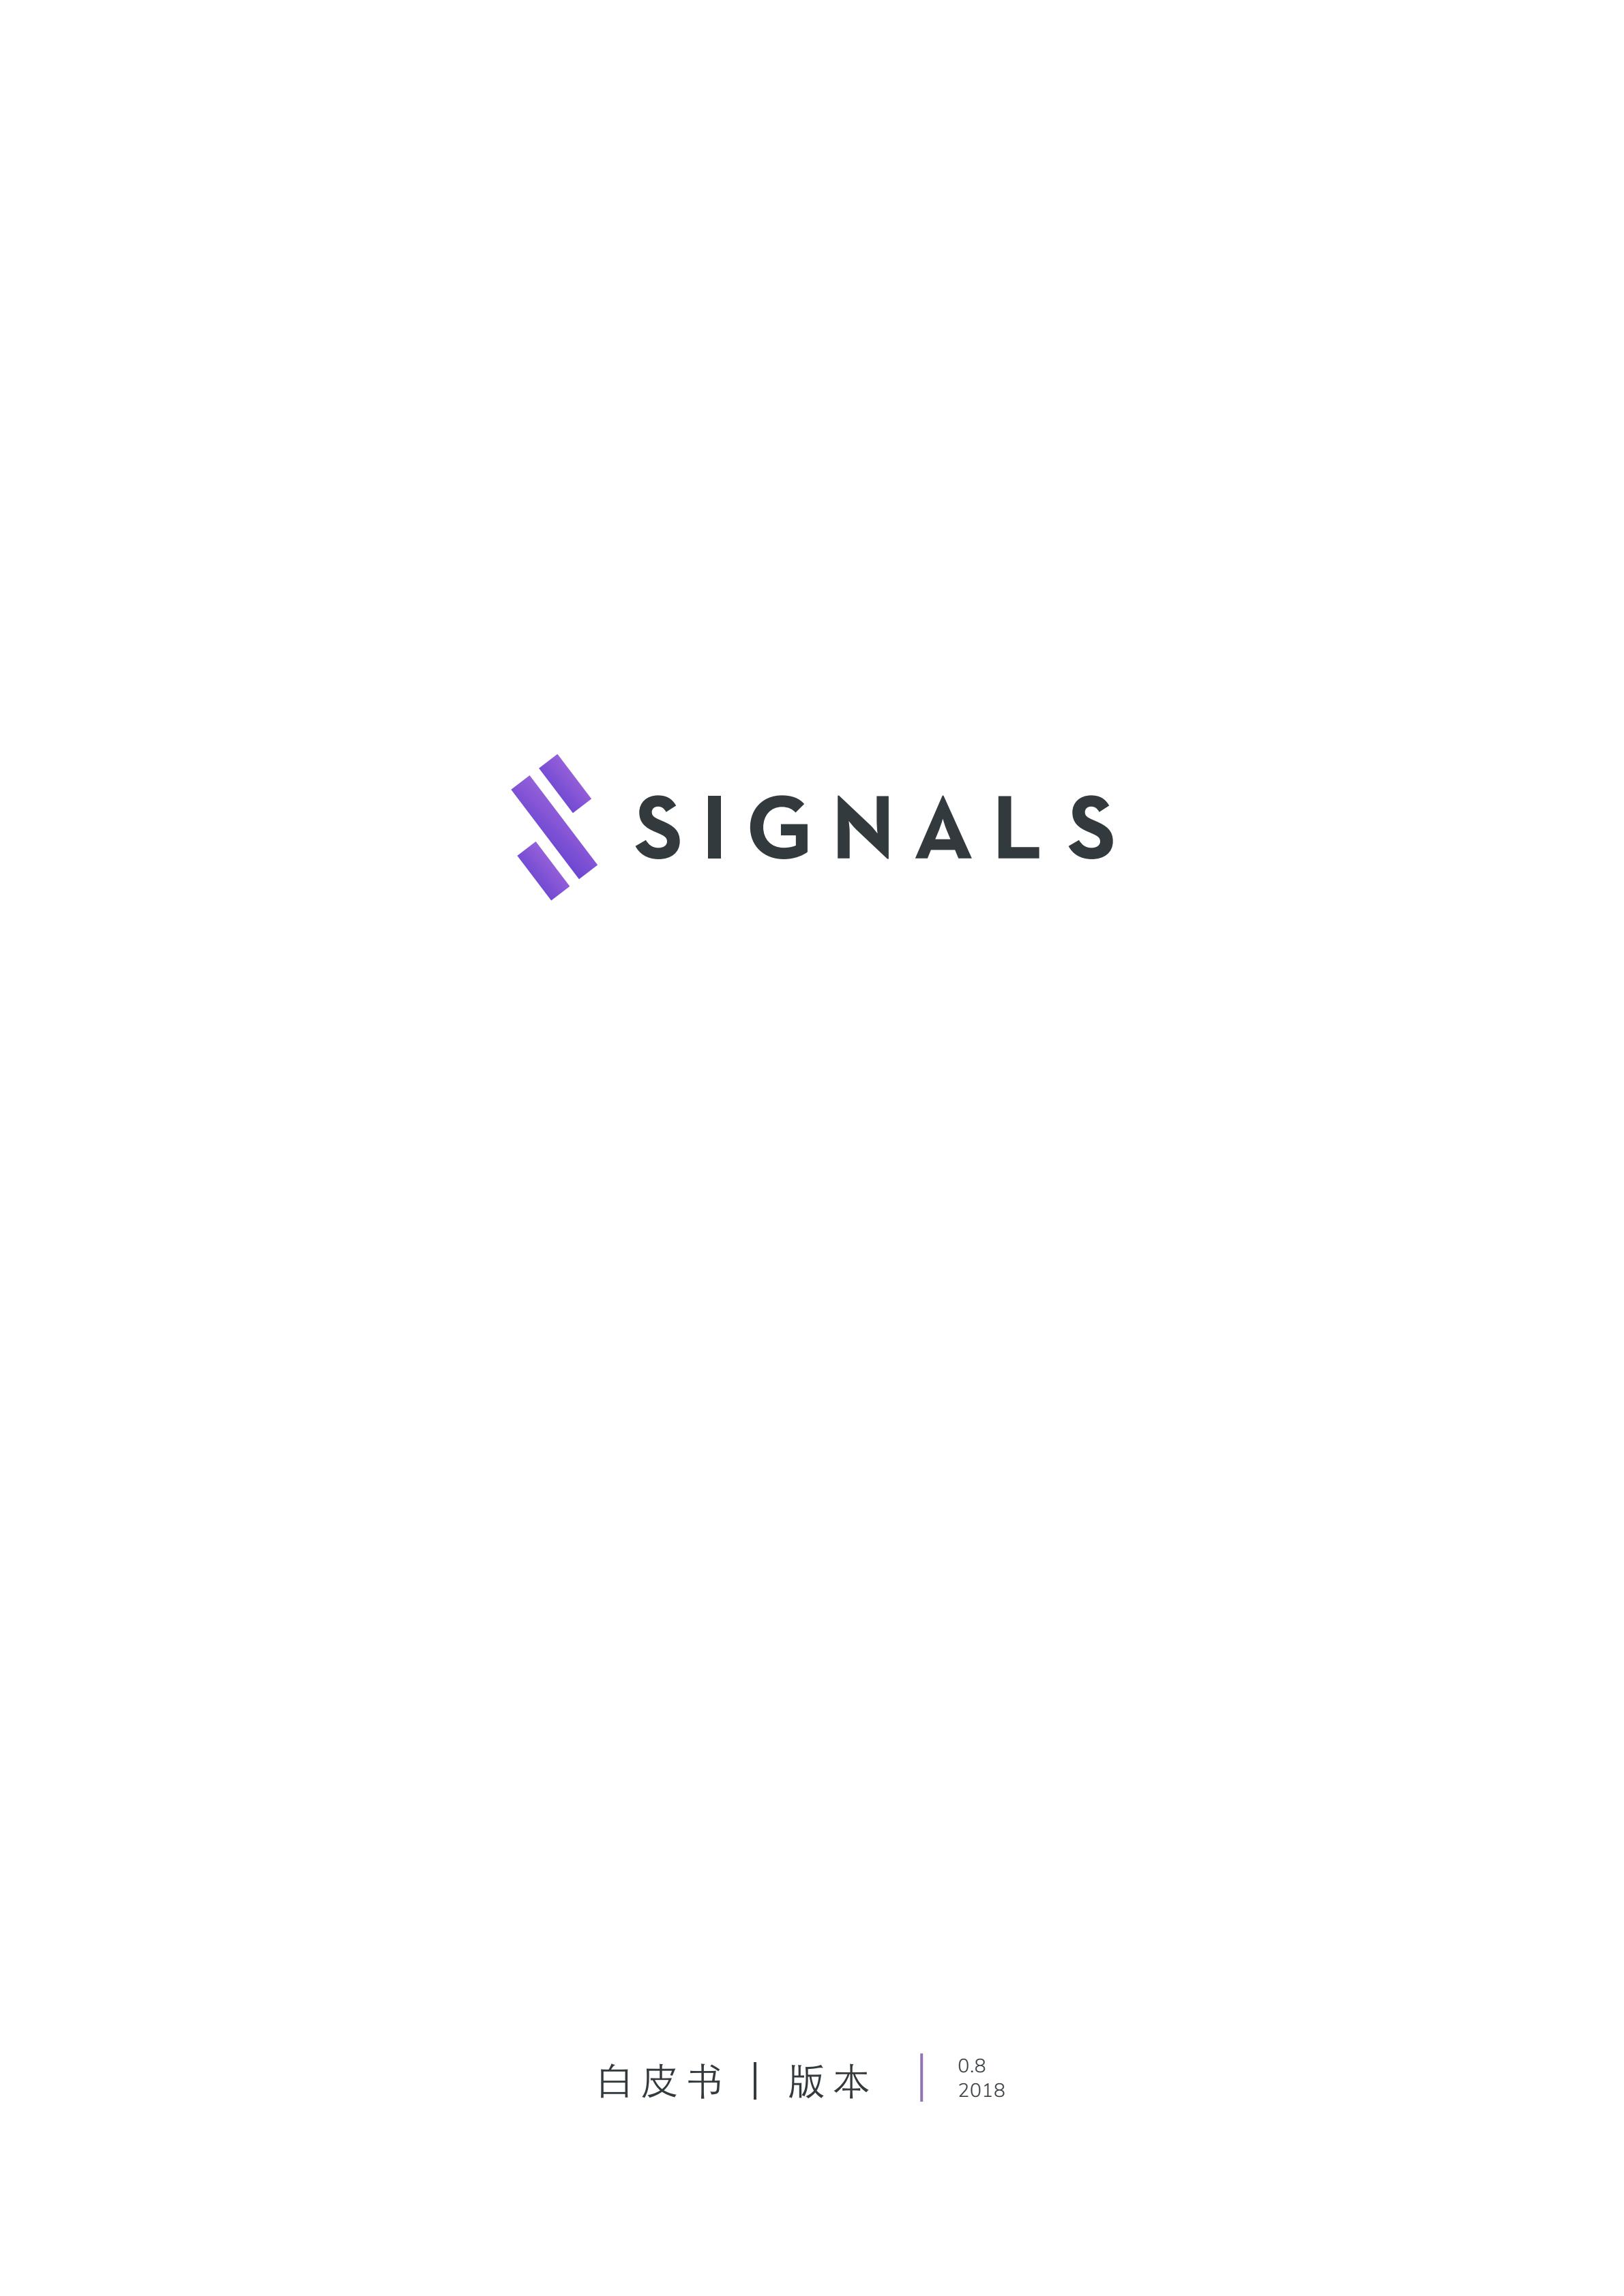 SGN_signals-whitepaper-zh_00.jpg